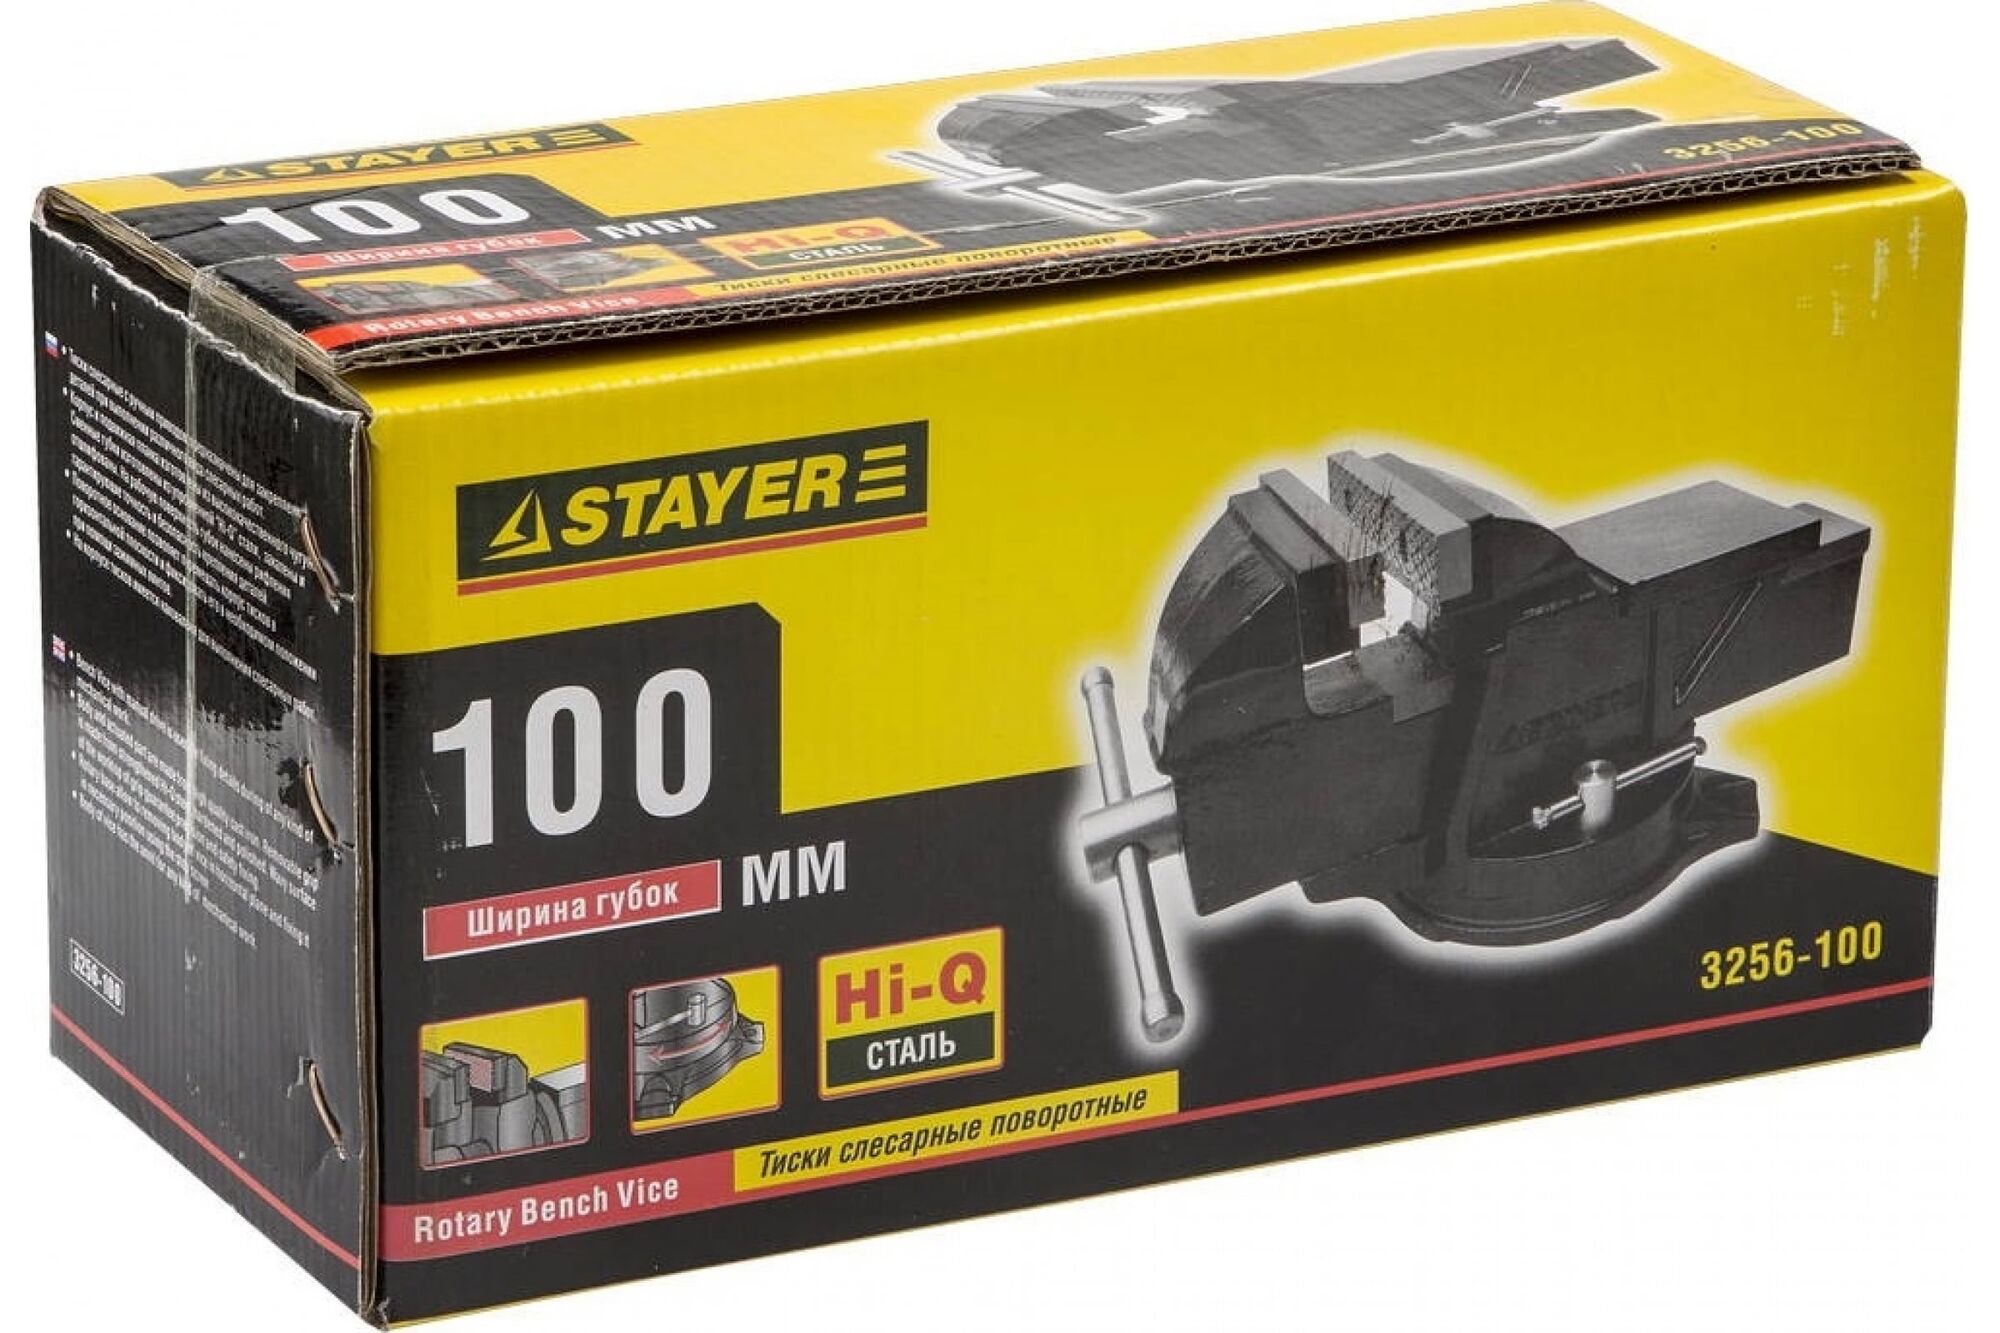 Слесарные тиски STAYER 100 мм 3256-100 2